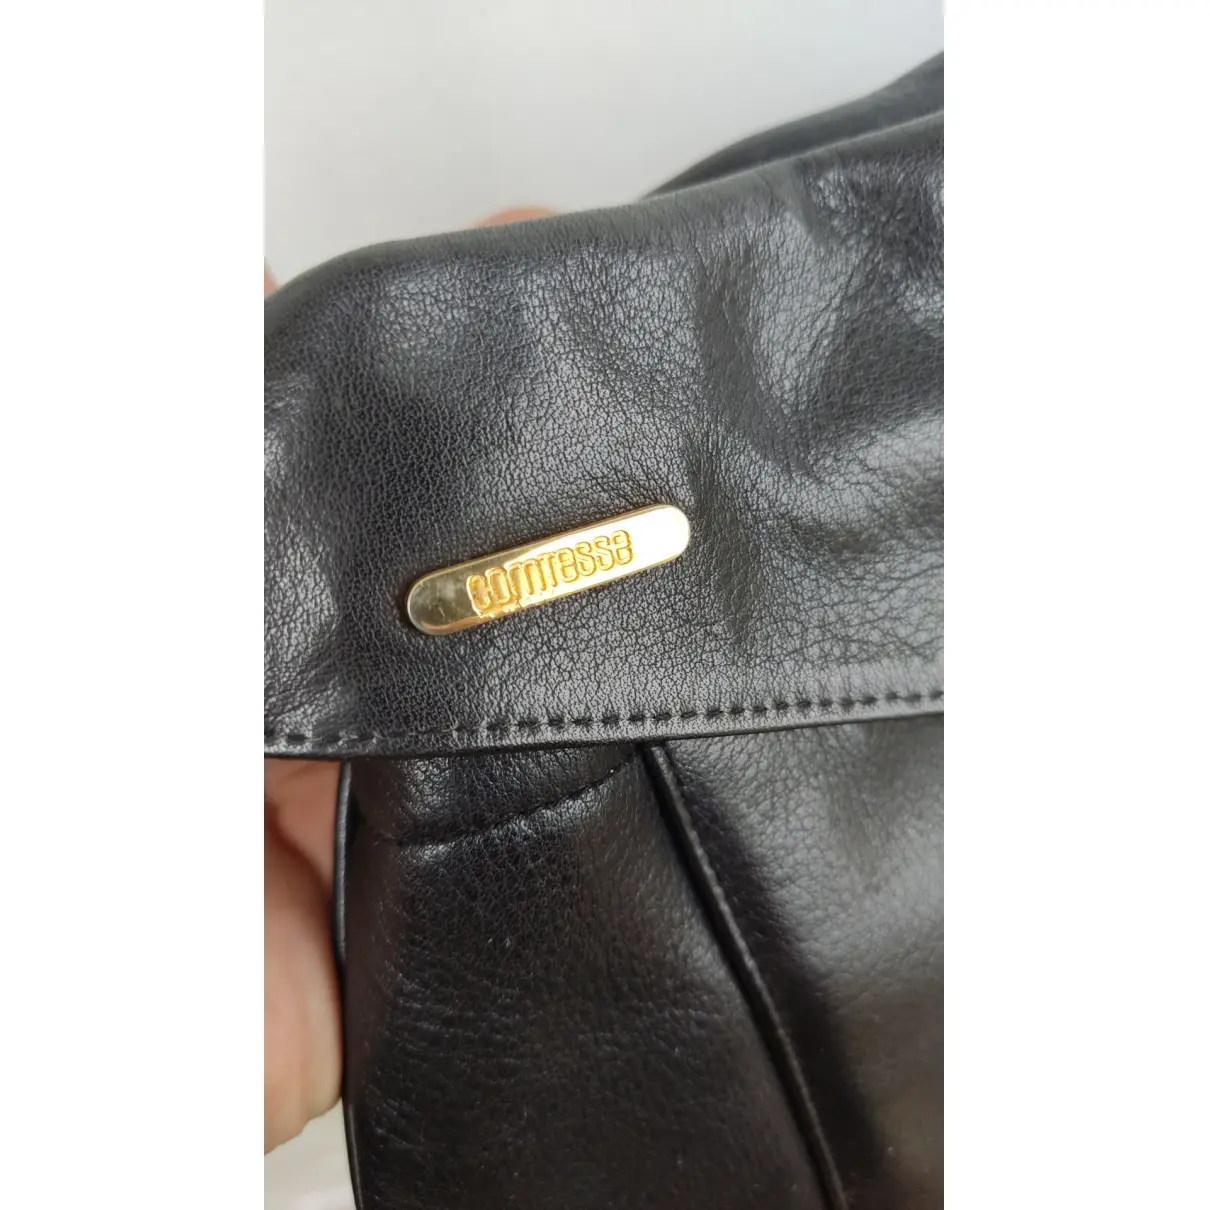 Leather handbag Comtesse